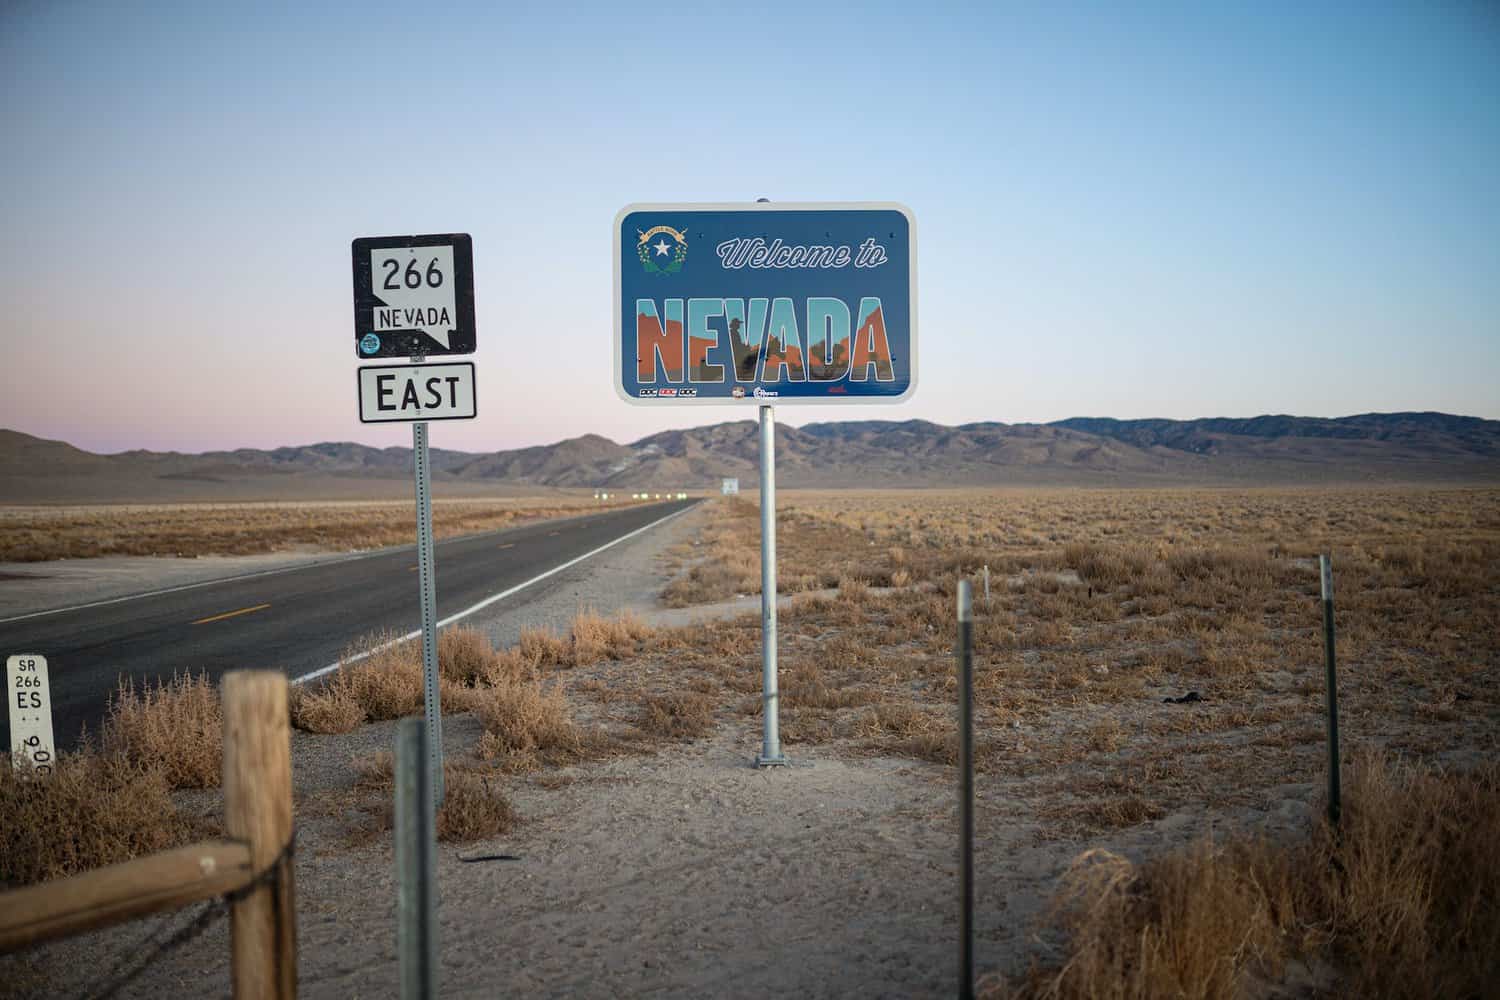 nevada signage. Area 51 one of the worlds greatest secrets 